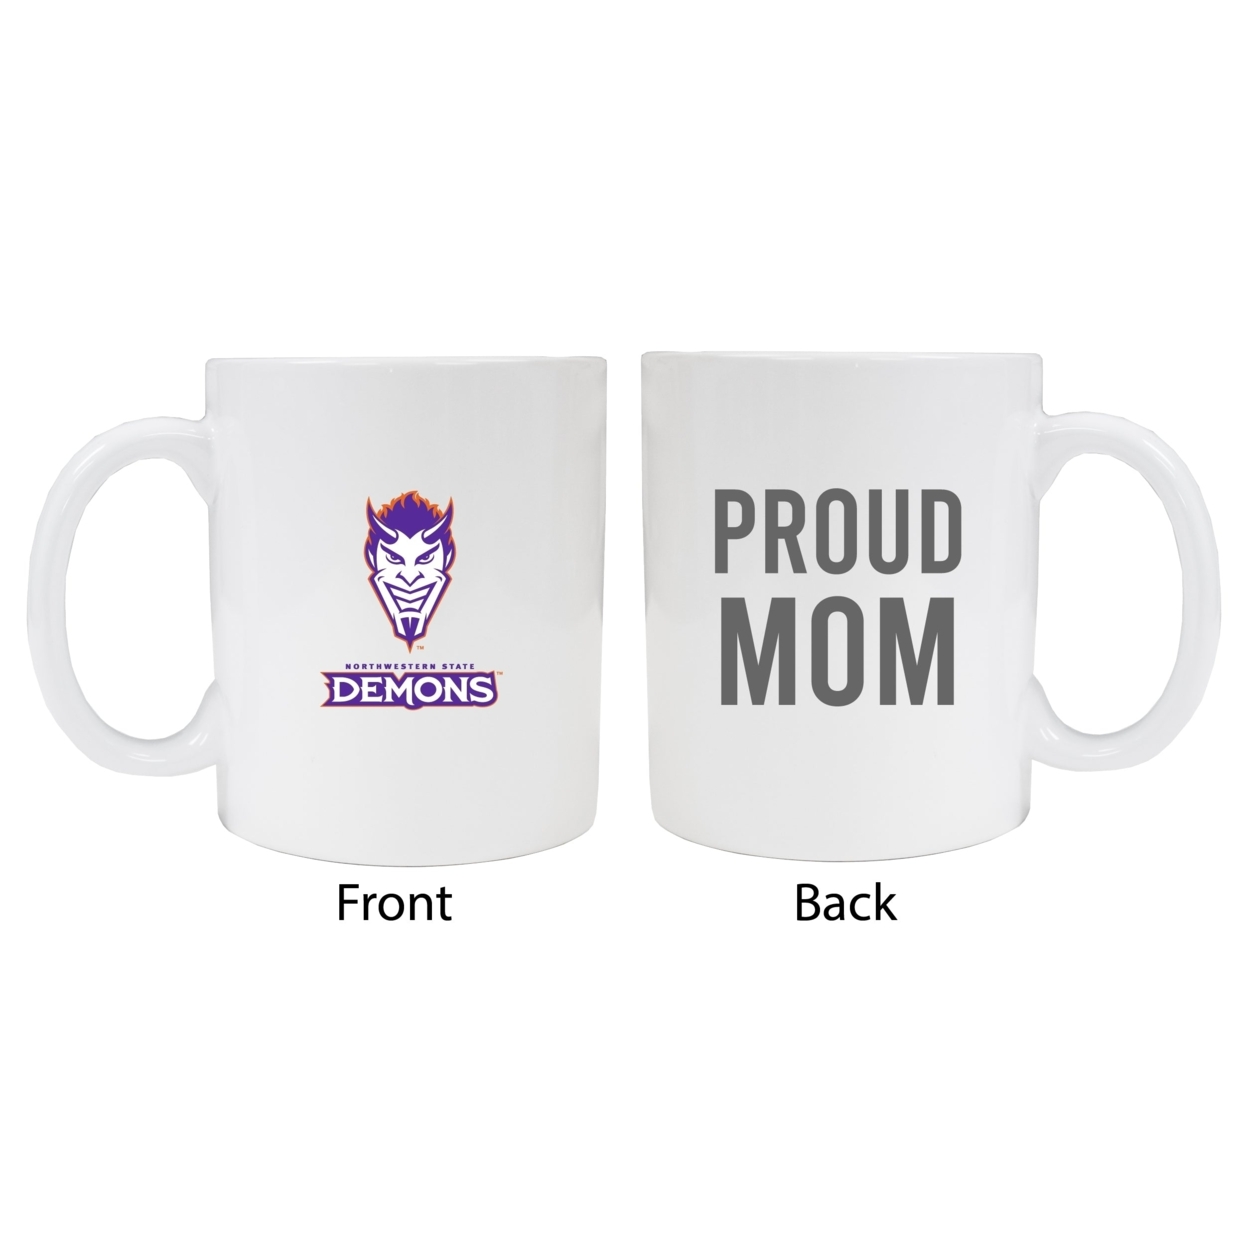 Northwestern State Demons Proud Mom Ceramic Coffee Mug - White (2 Pack)